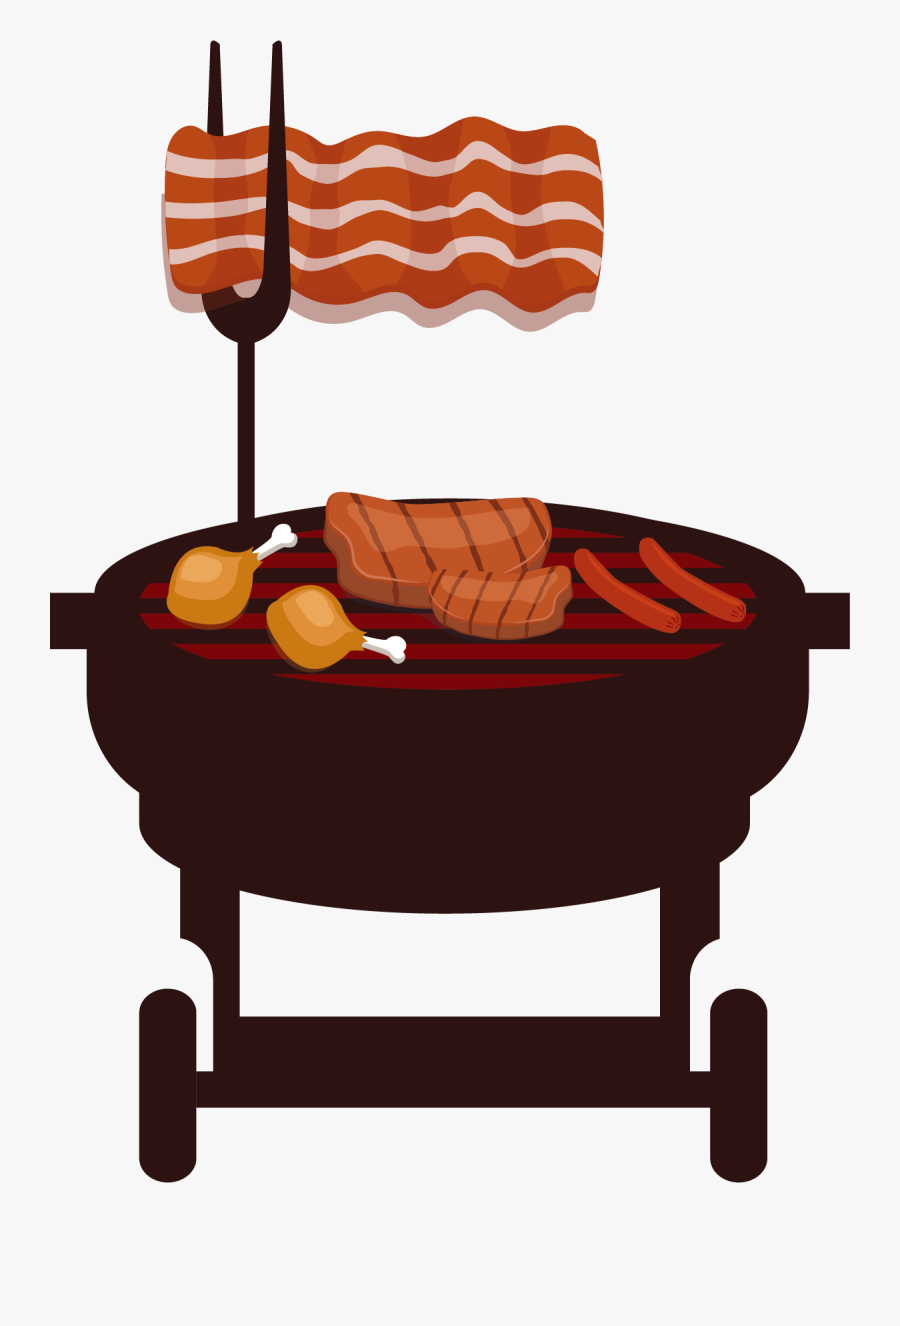 Barbacoa Churrasco Beefsteak Illustration - Churrasco Png, Transparent Clipart